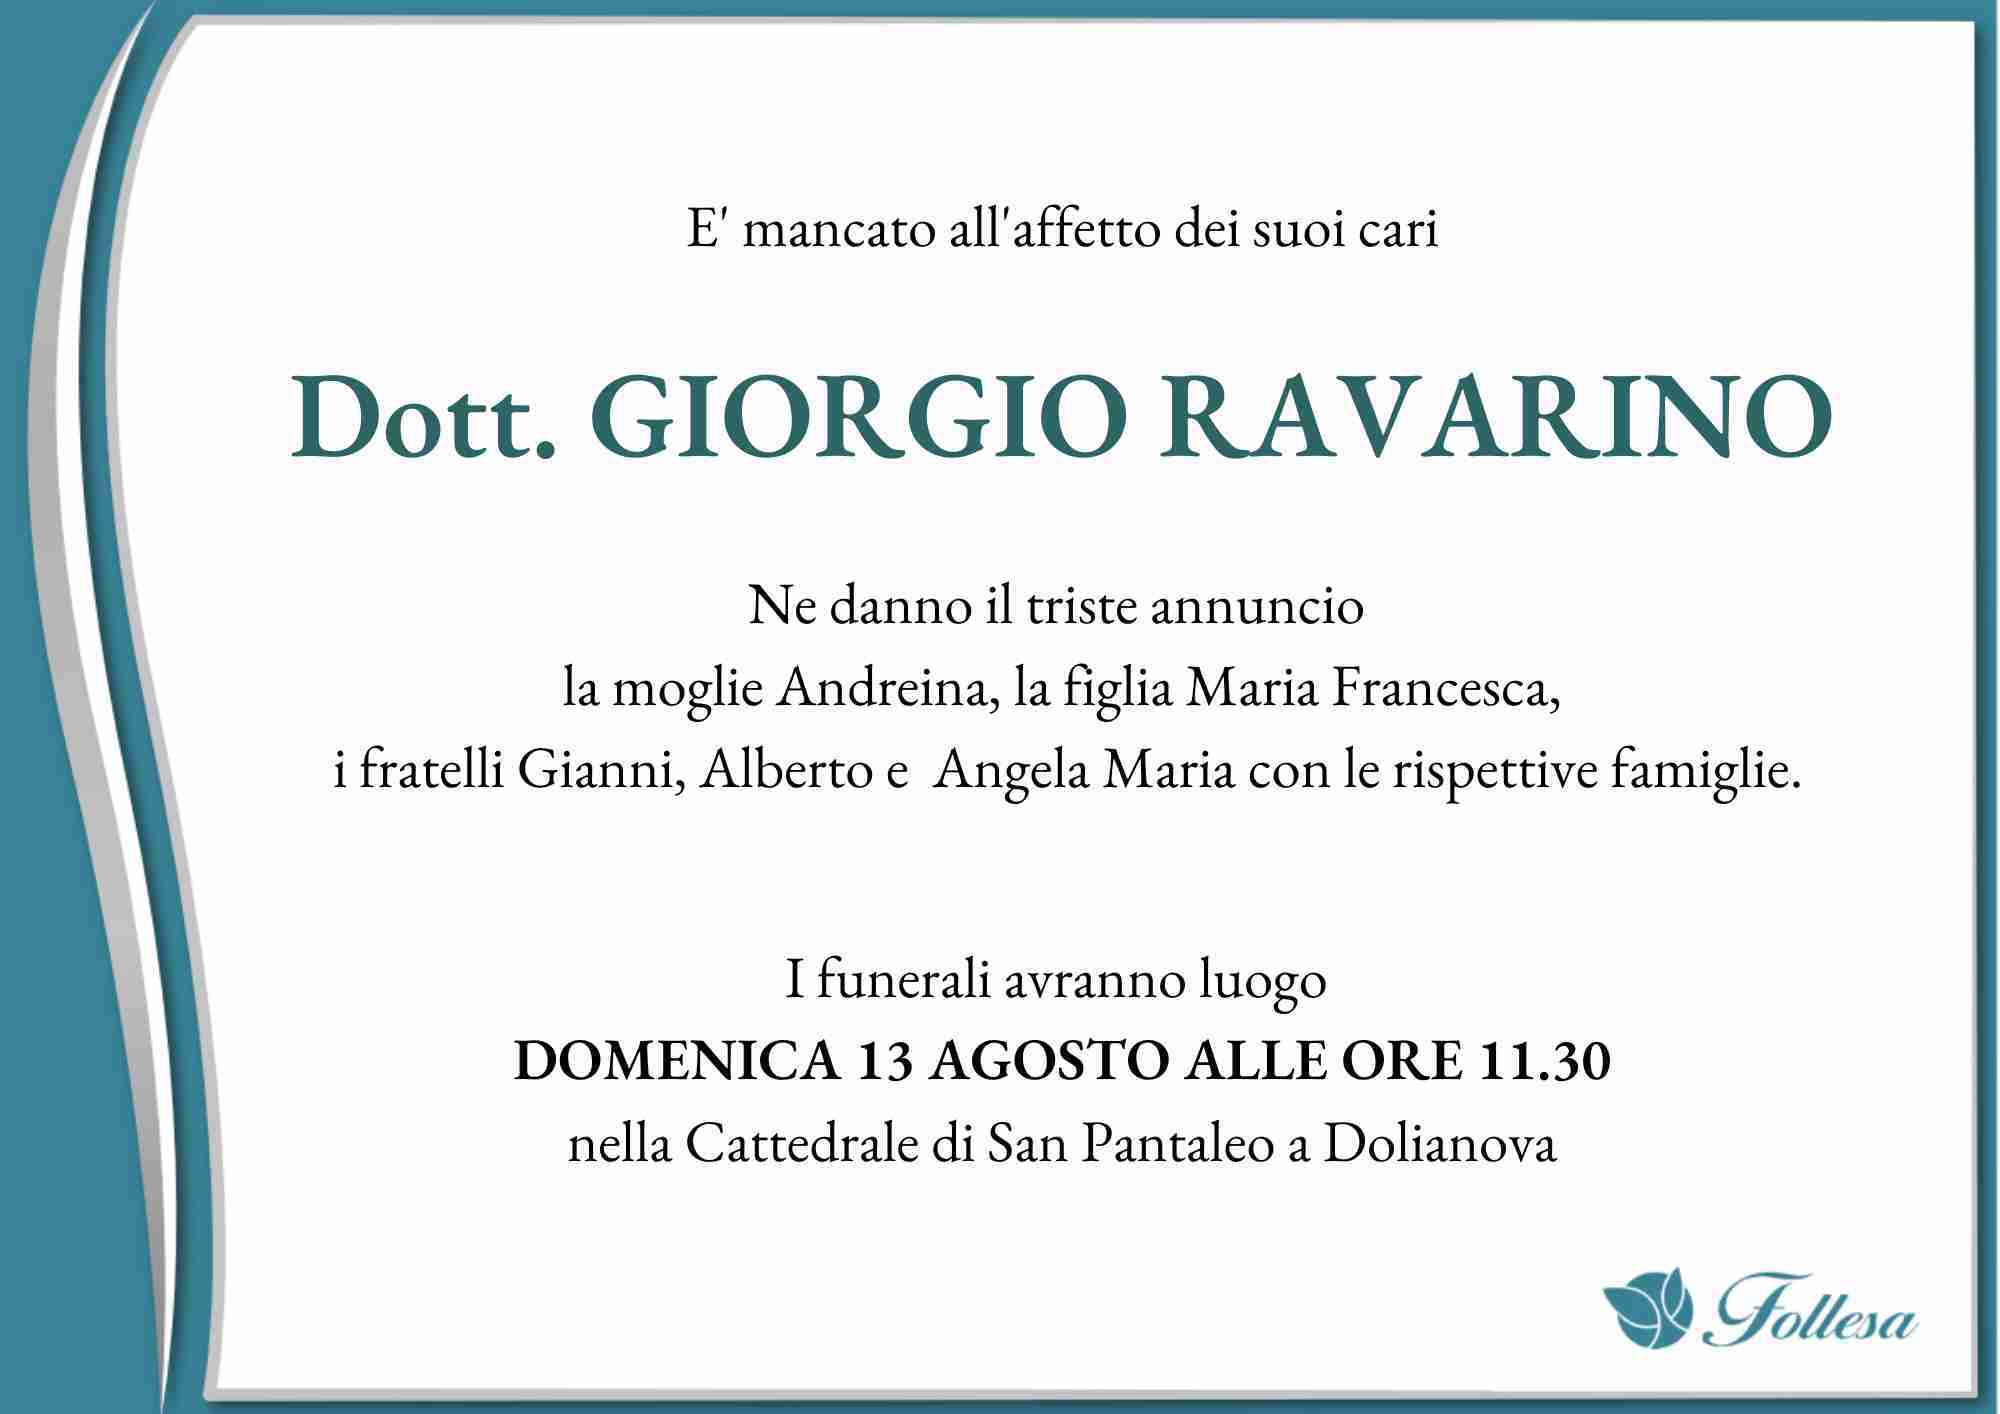 Giorgio Ravarino